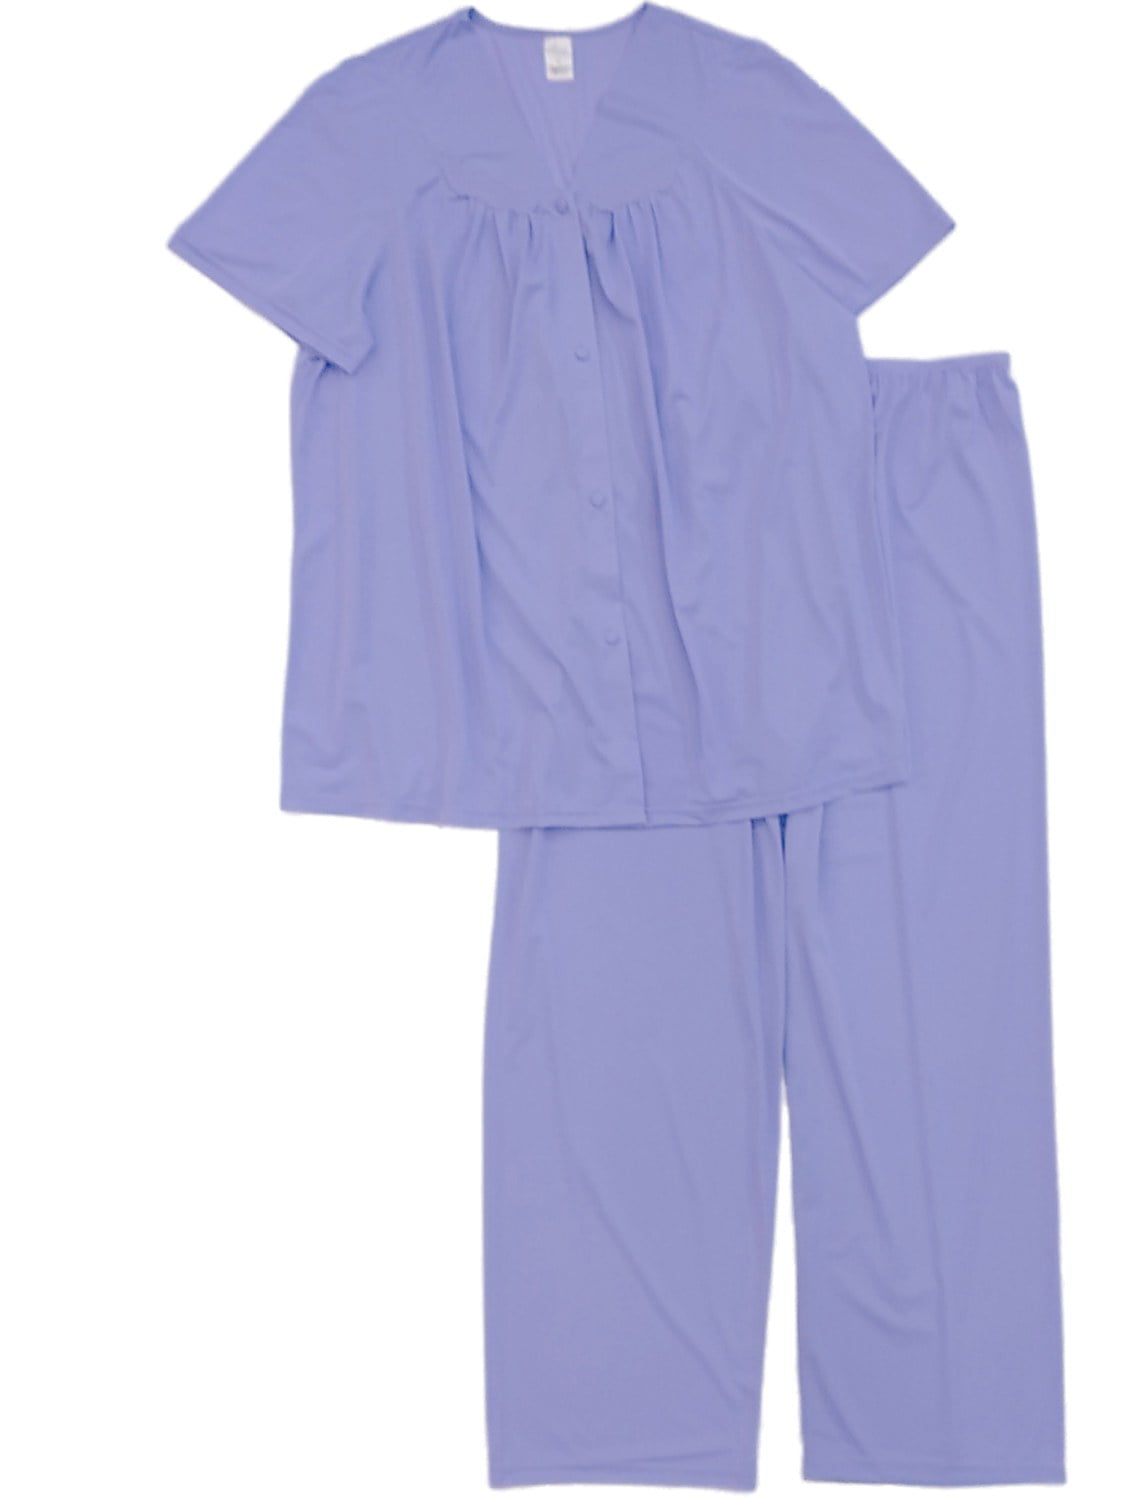 The Lilac Set LV – Inspired Designer Long Sleeved Satin Pyjamas – Luda  Avenue